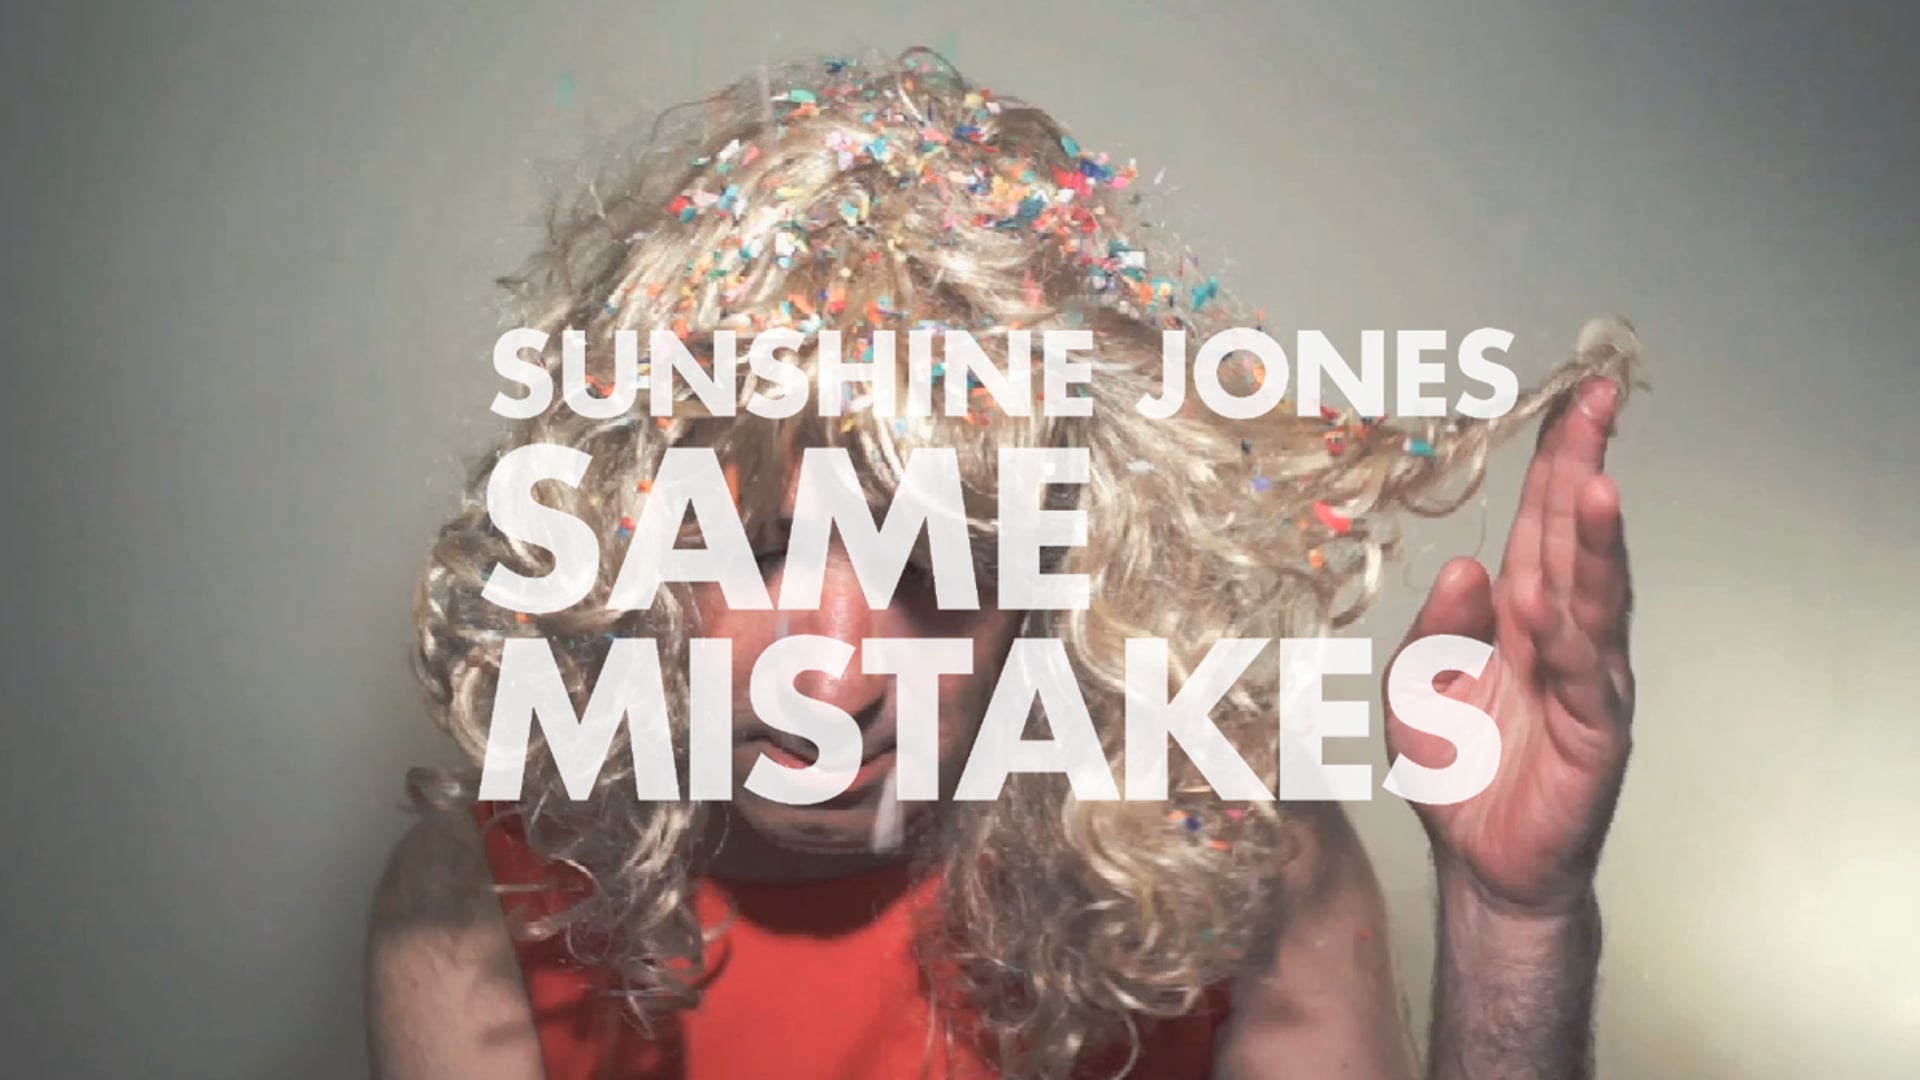 Same Mistakes - Sunshine Jones